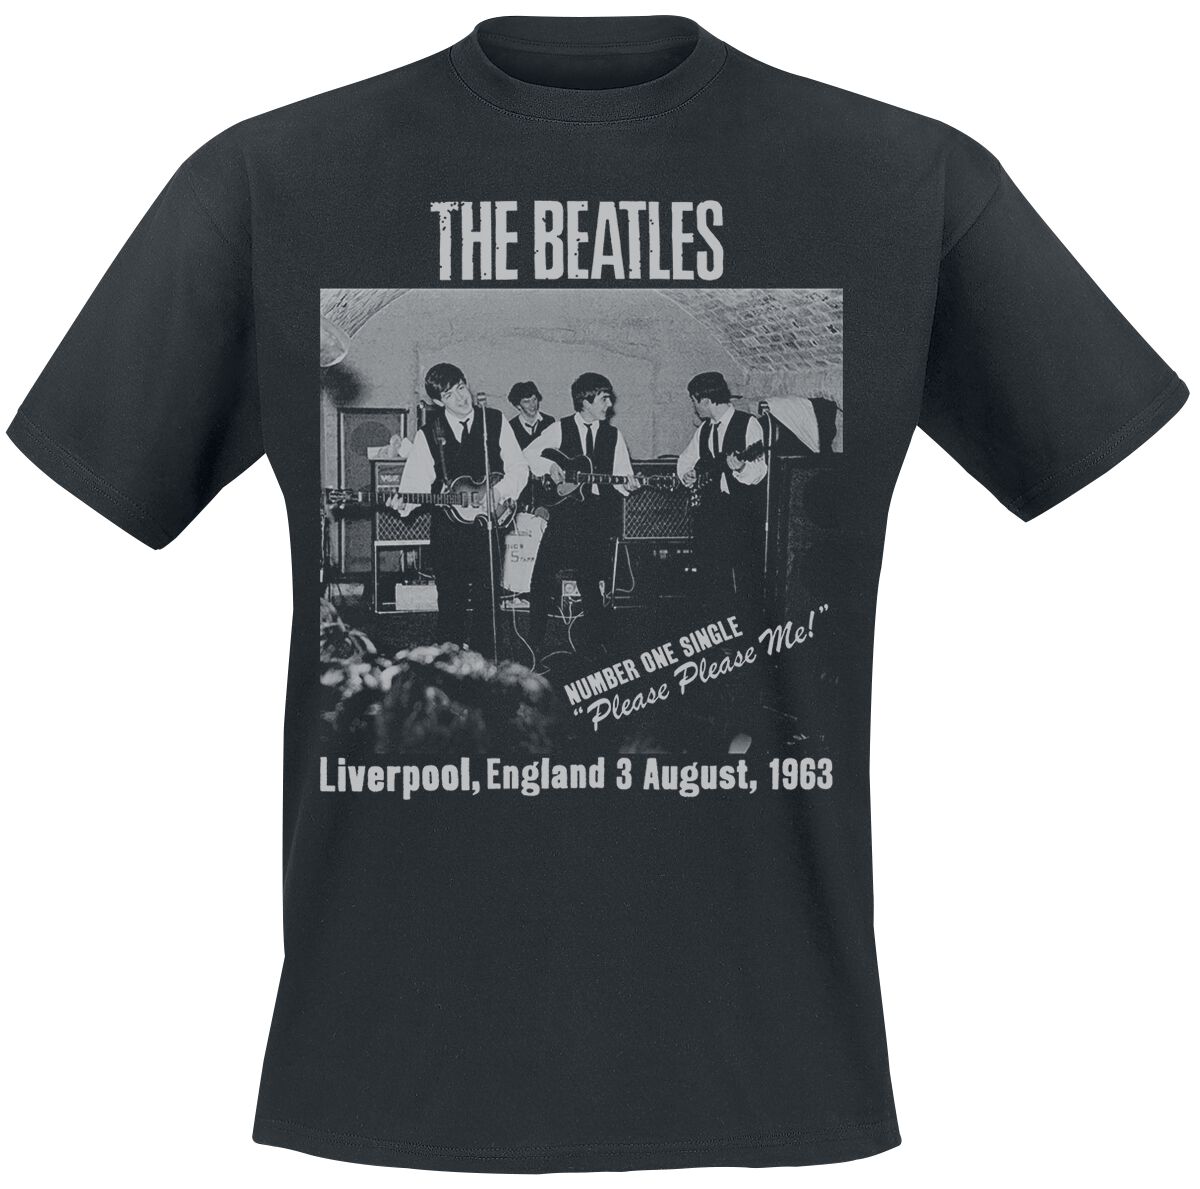 The Beatles Liverpool 1963 T-Shirt black